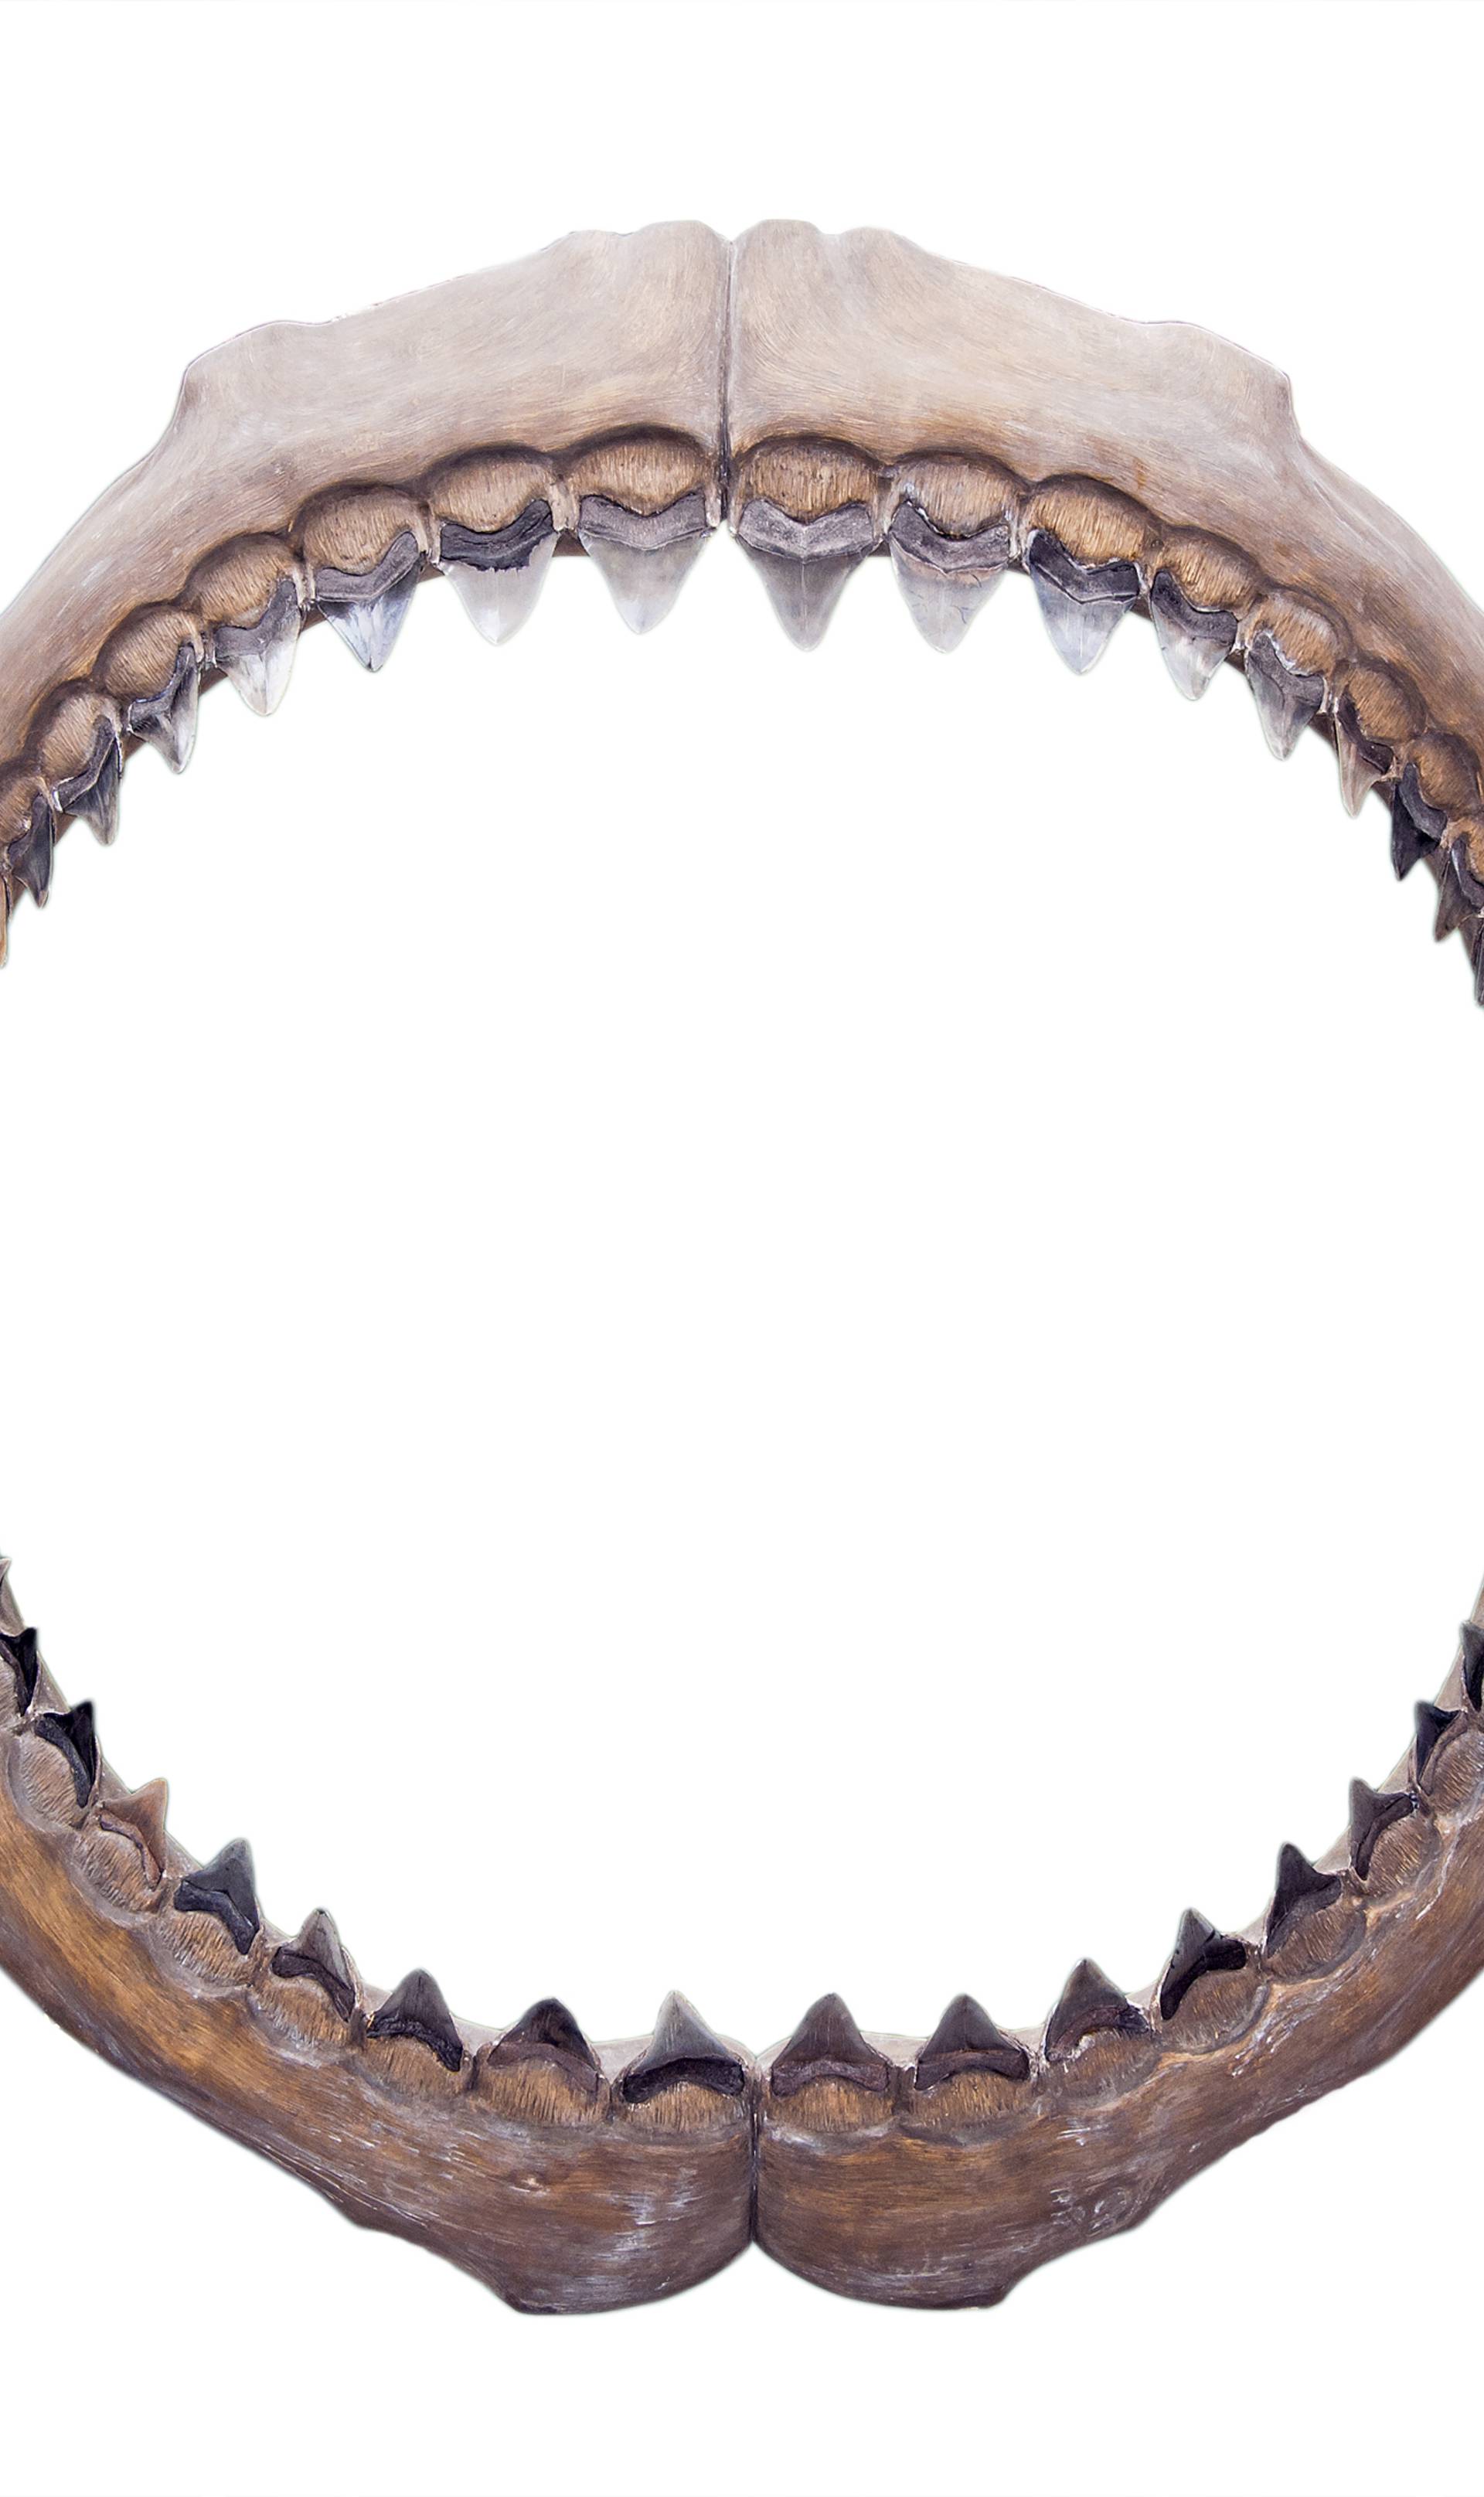 Ralje iz panonskih dubina: Zub megalodona našli i u Slavoniji